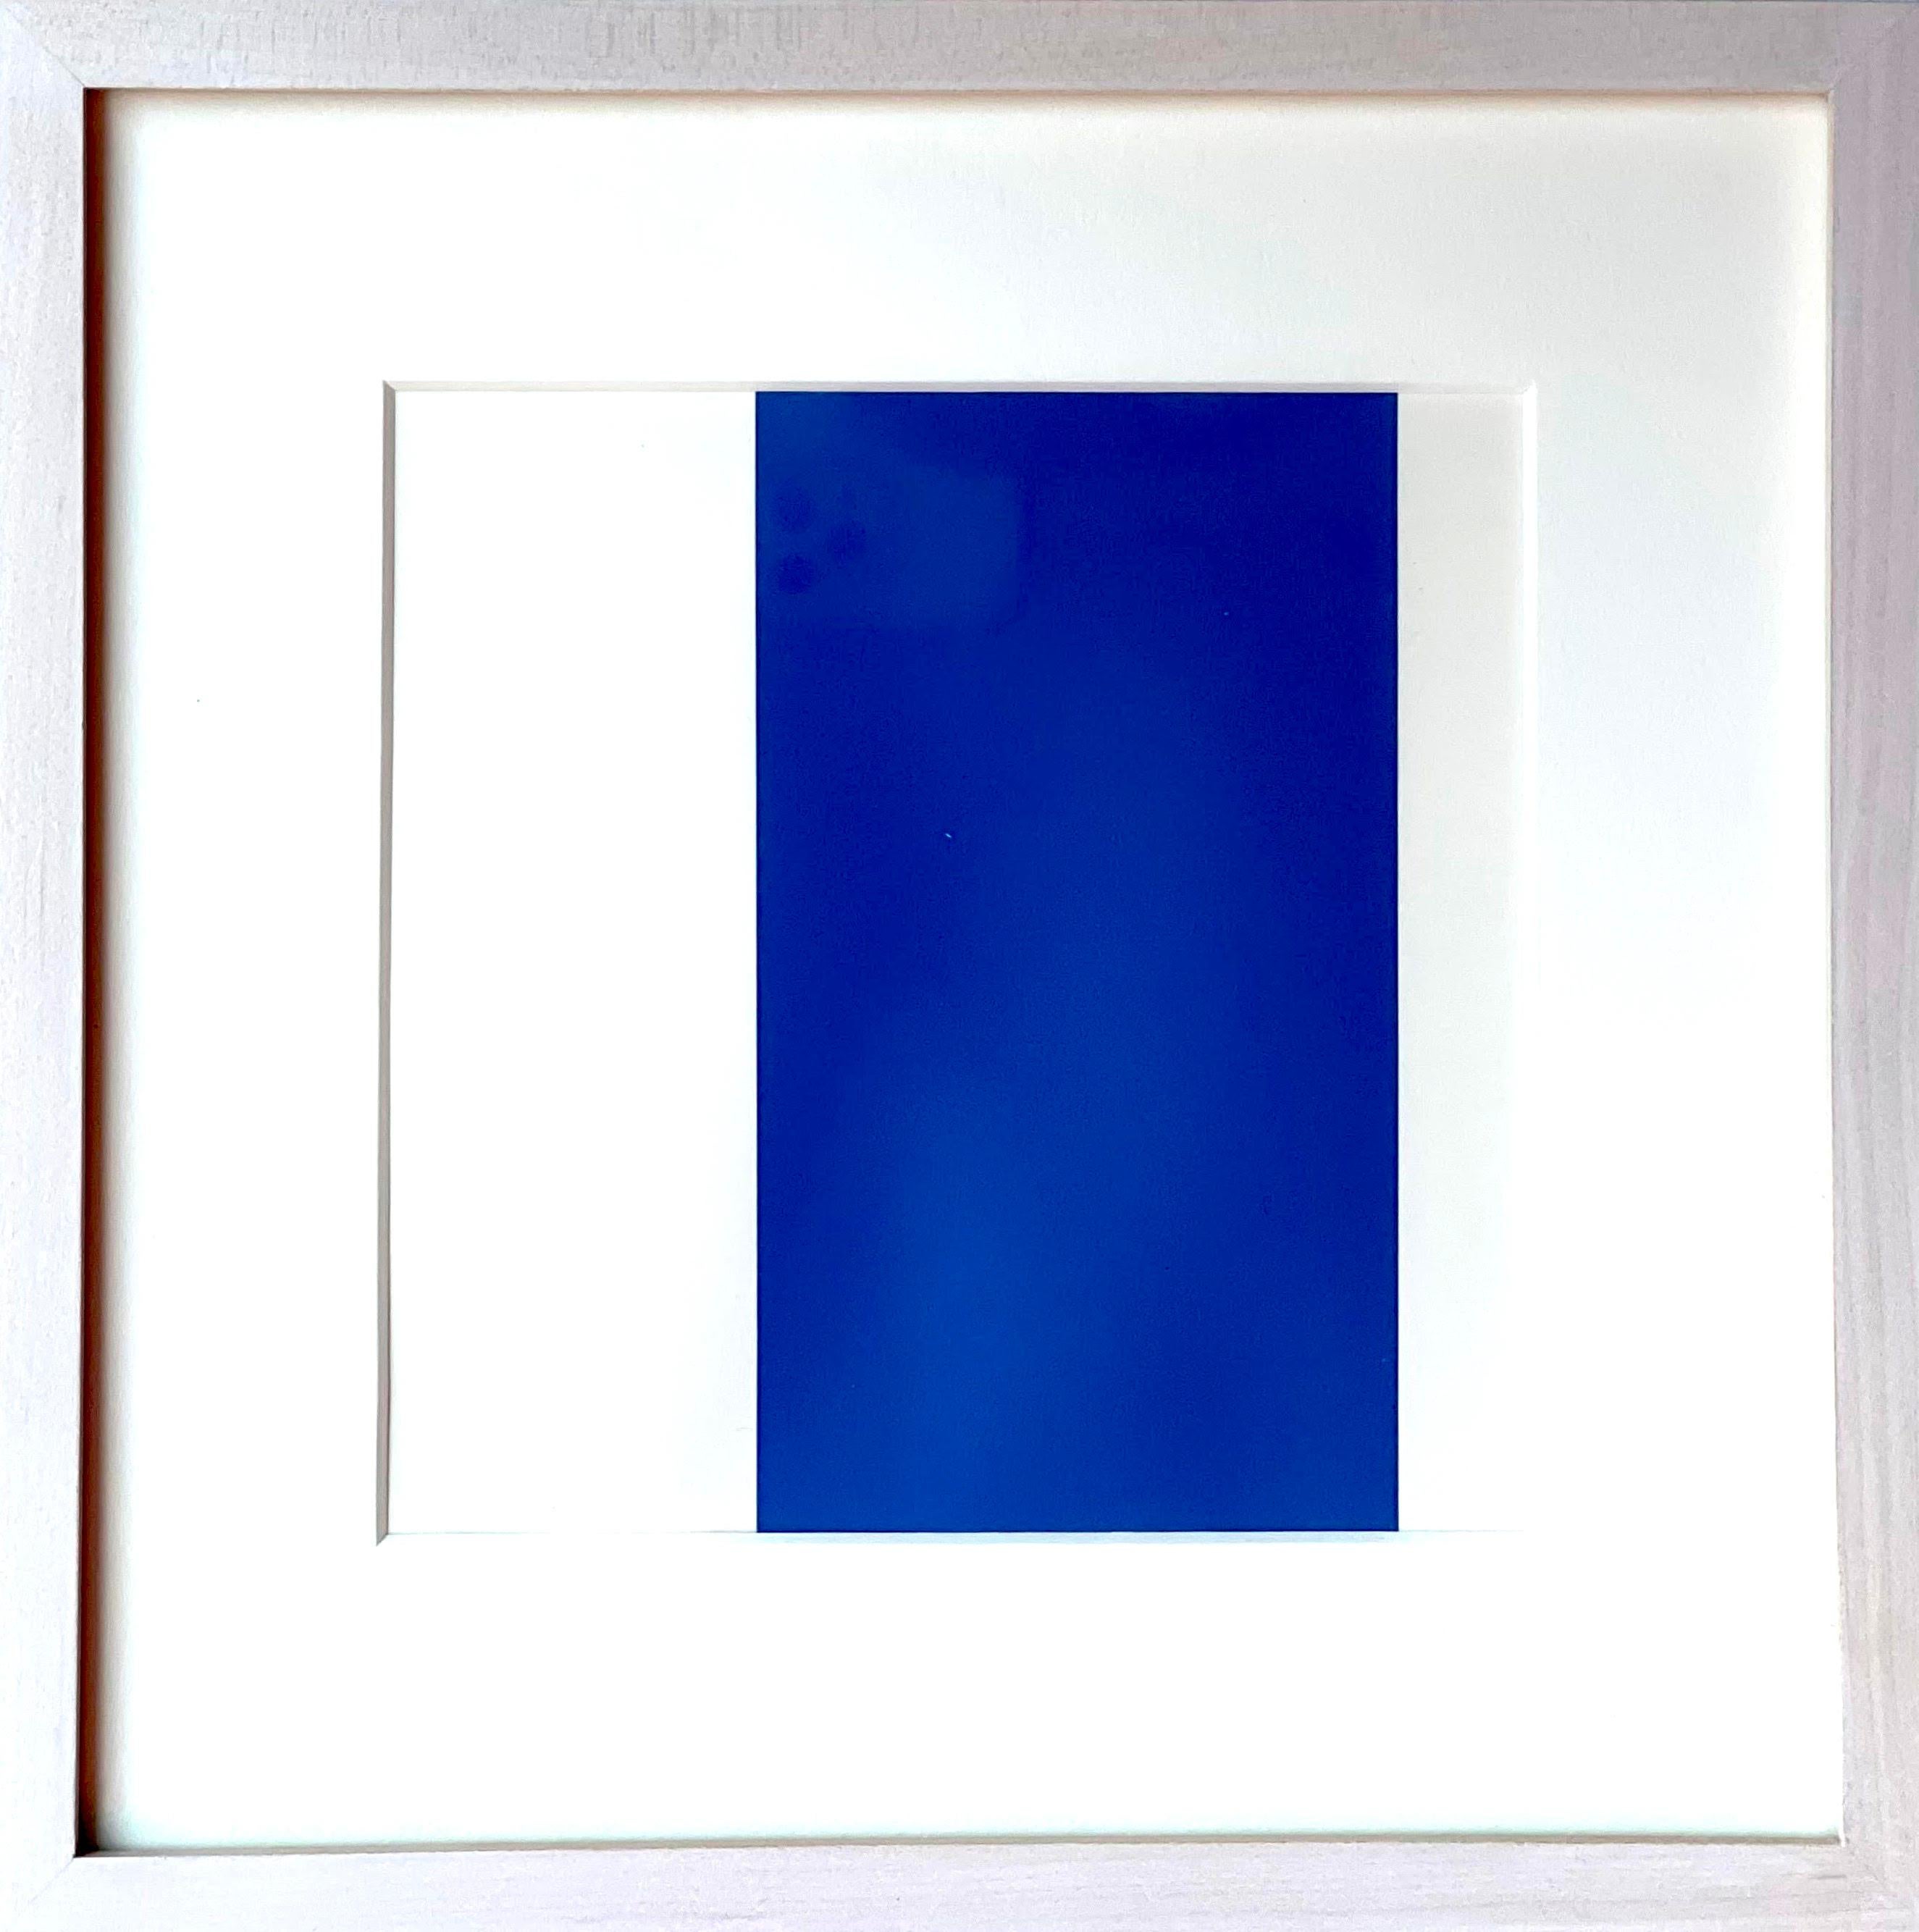 Blue, from 1000 Placements (Rubber Stamp Portfolio) - Print by Daniel Buren